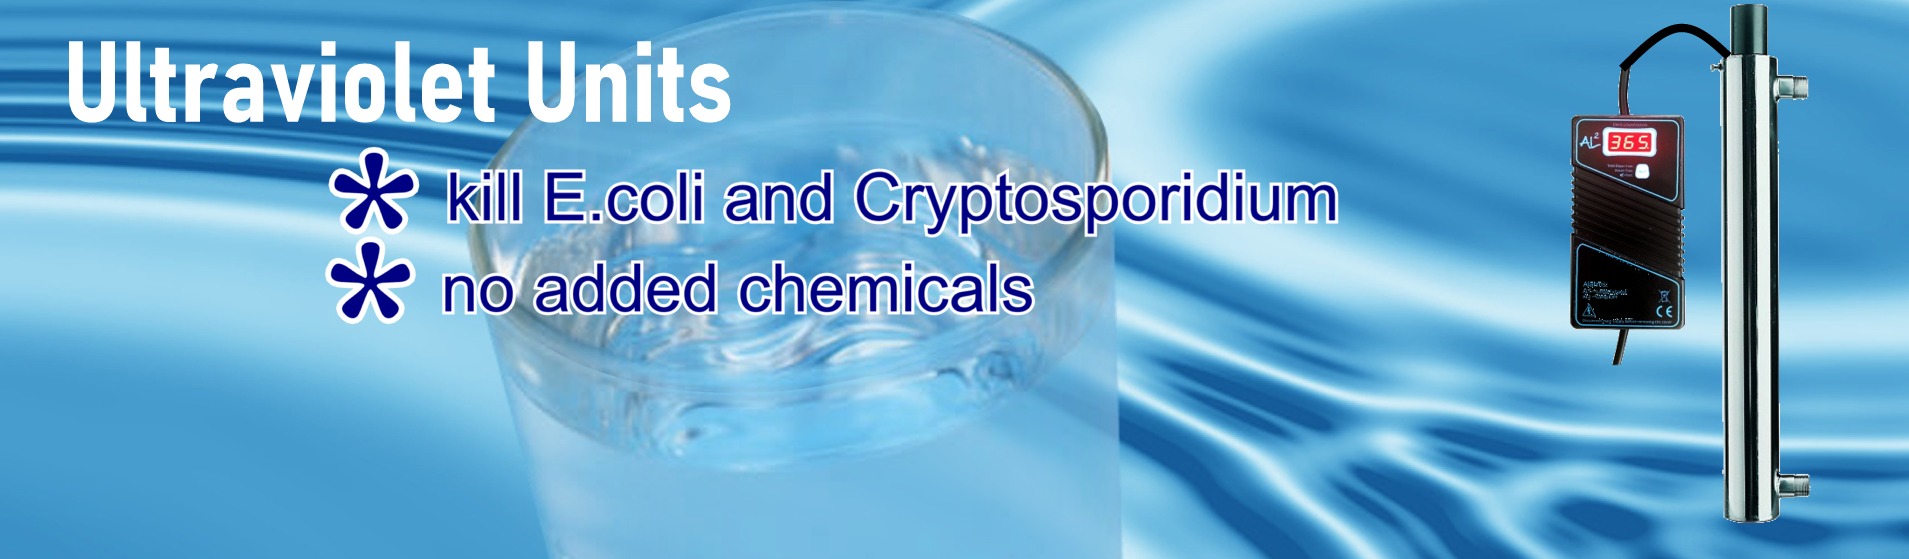 Ultraviolet units - kill E.coli and Cryptosporidium, no added chemicals - Direct Water Treatment, Co. Kilkenny, Ireland